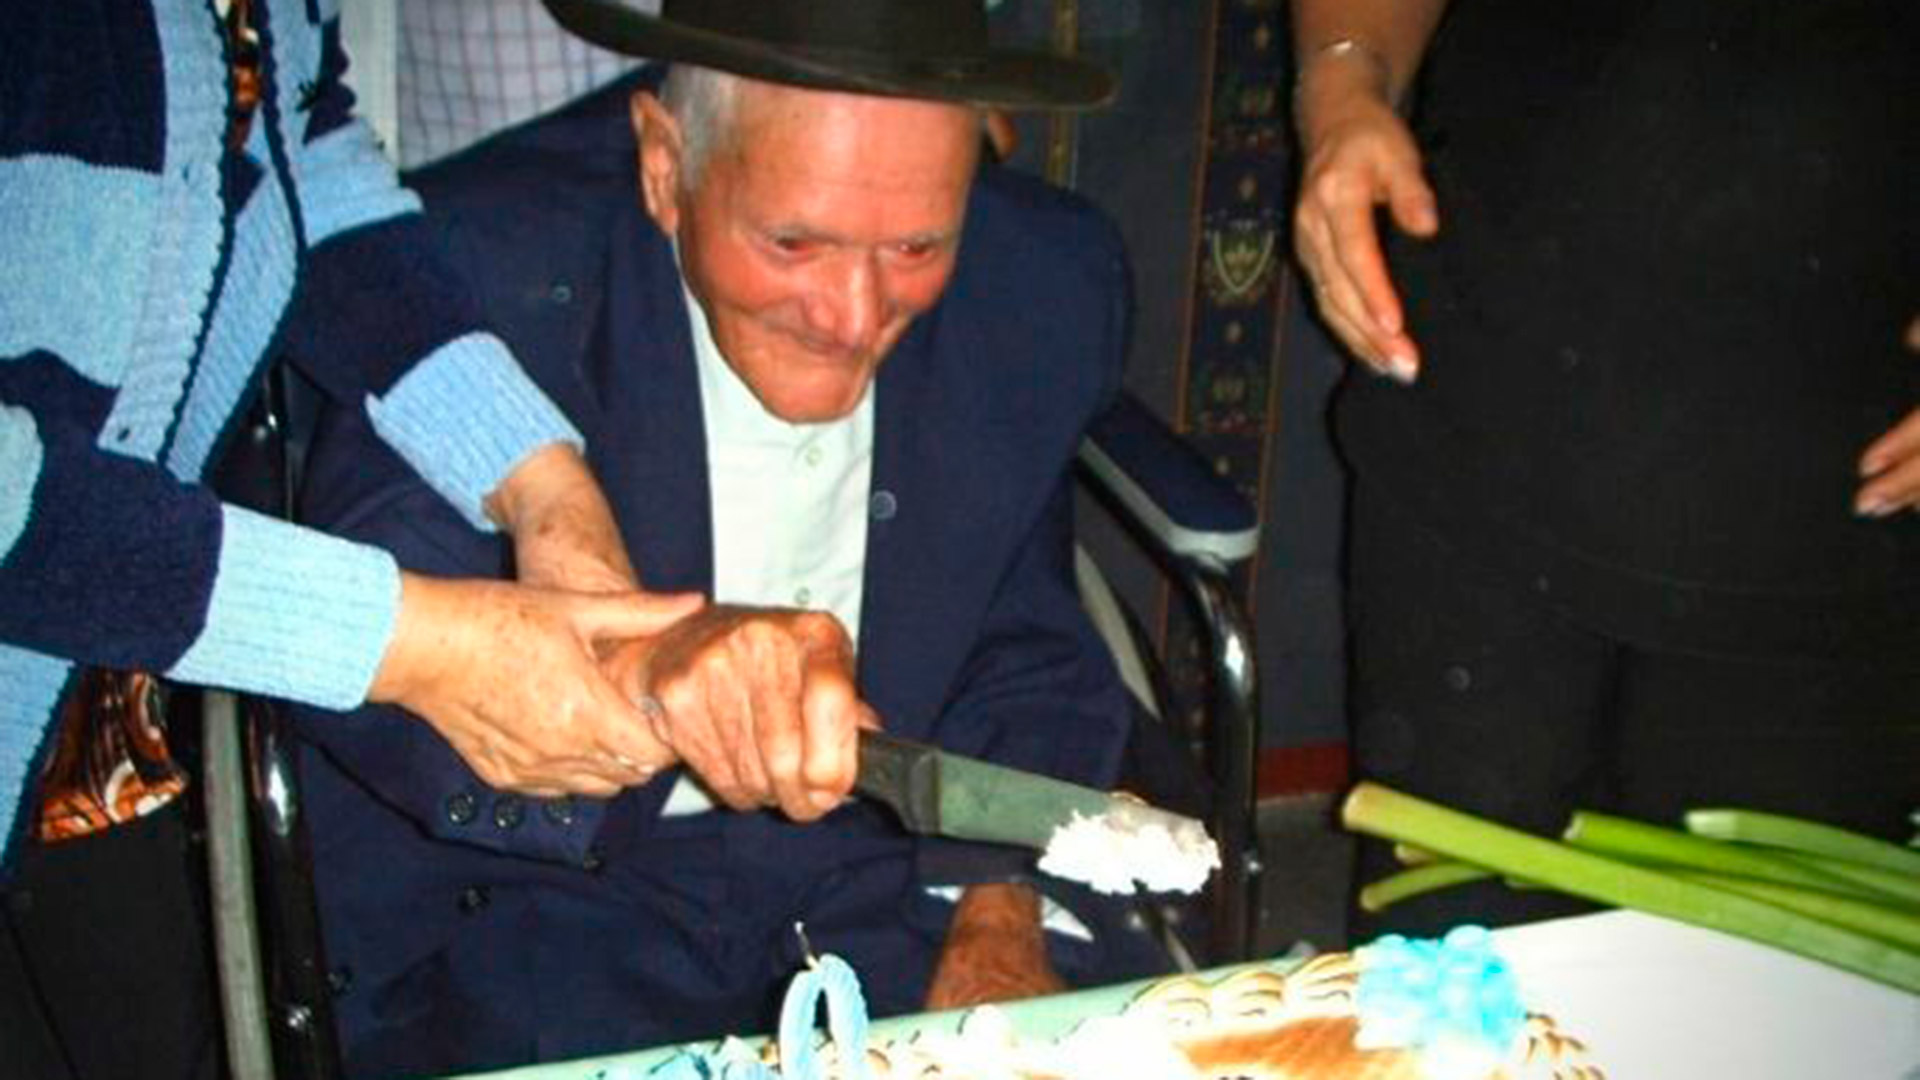 Juan Vicente Pérez celebrando su cumpleaños número 100